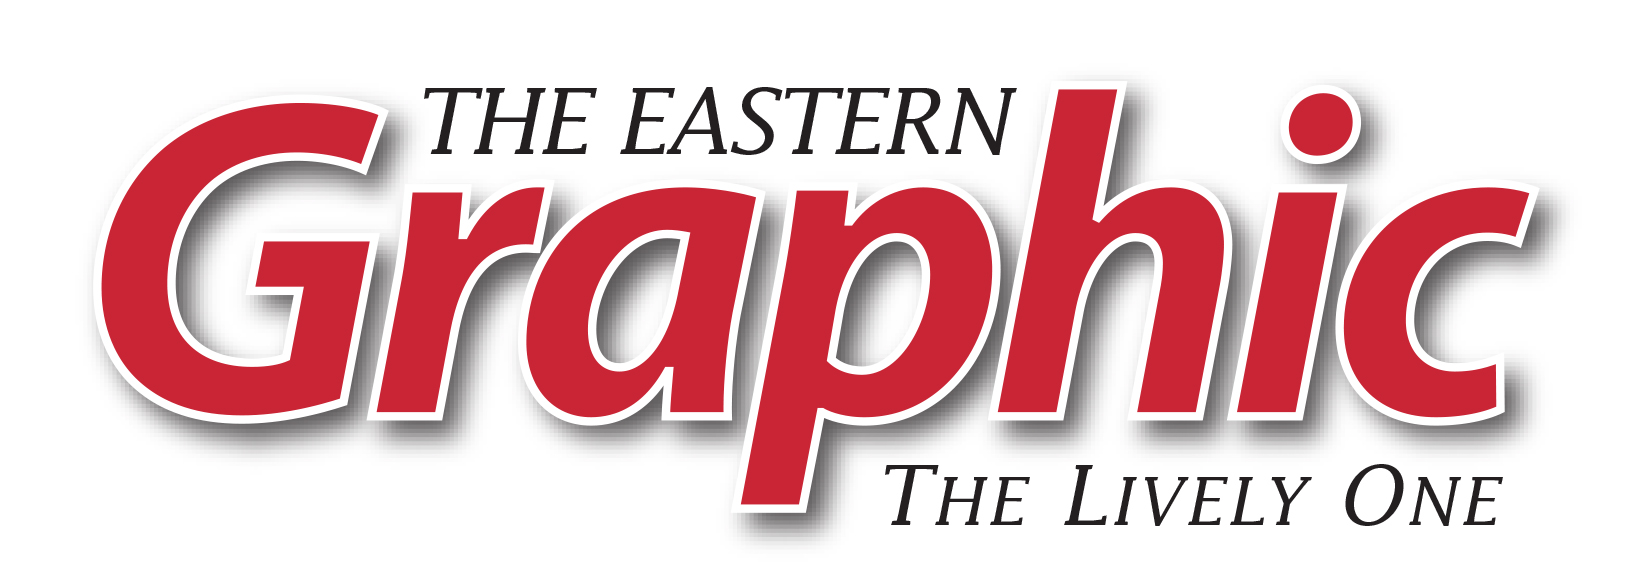 Eastern Graphic logo